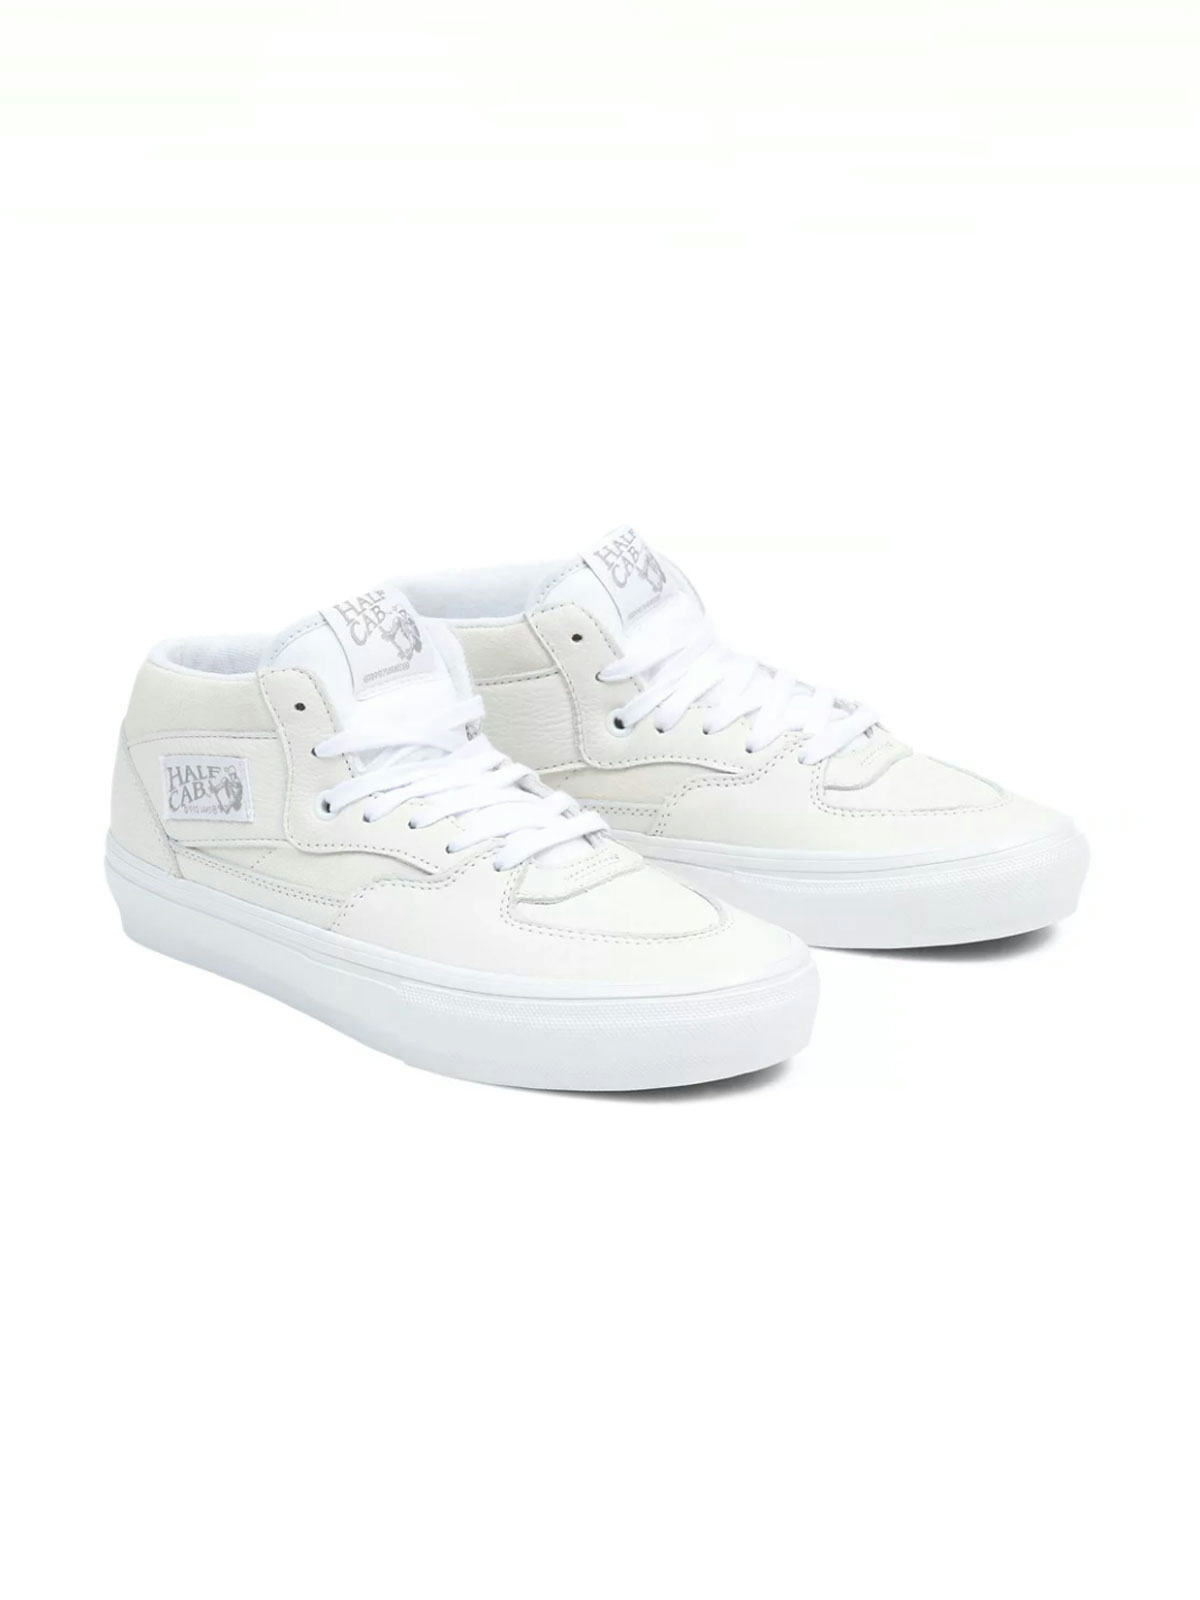 Vans Daz Skate Half Cab Shoes White/White 1